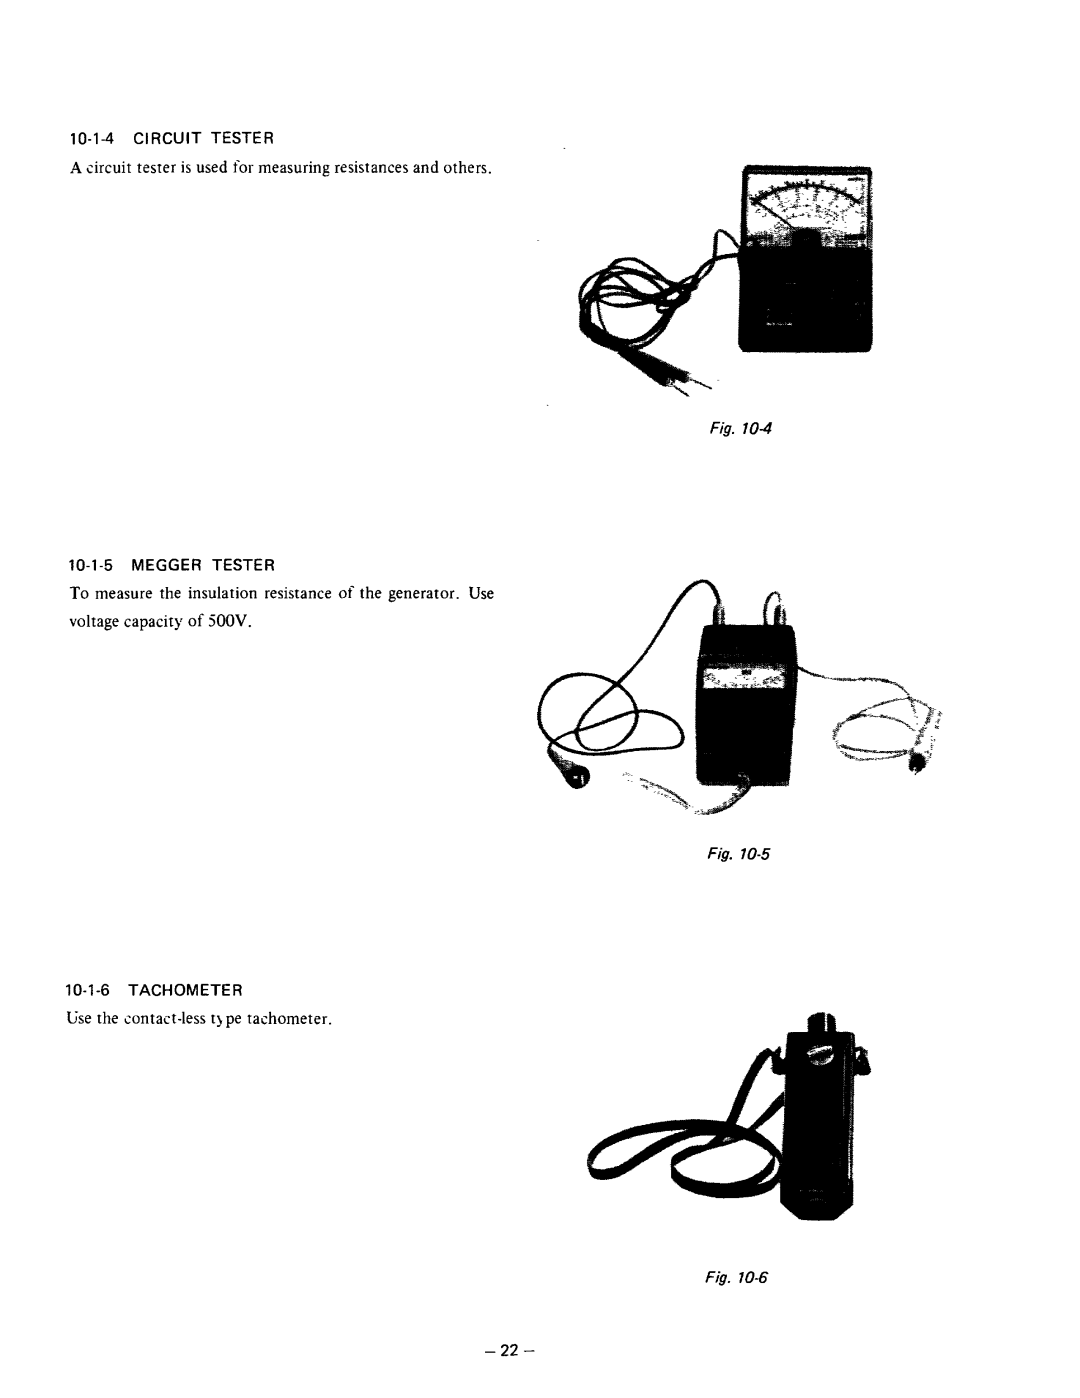 Subaru Robin Power Products R600 manual Use the contact-lesstl pe tachometer 